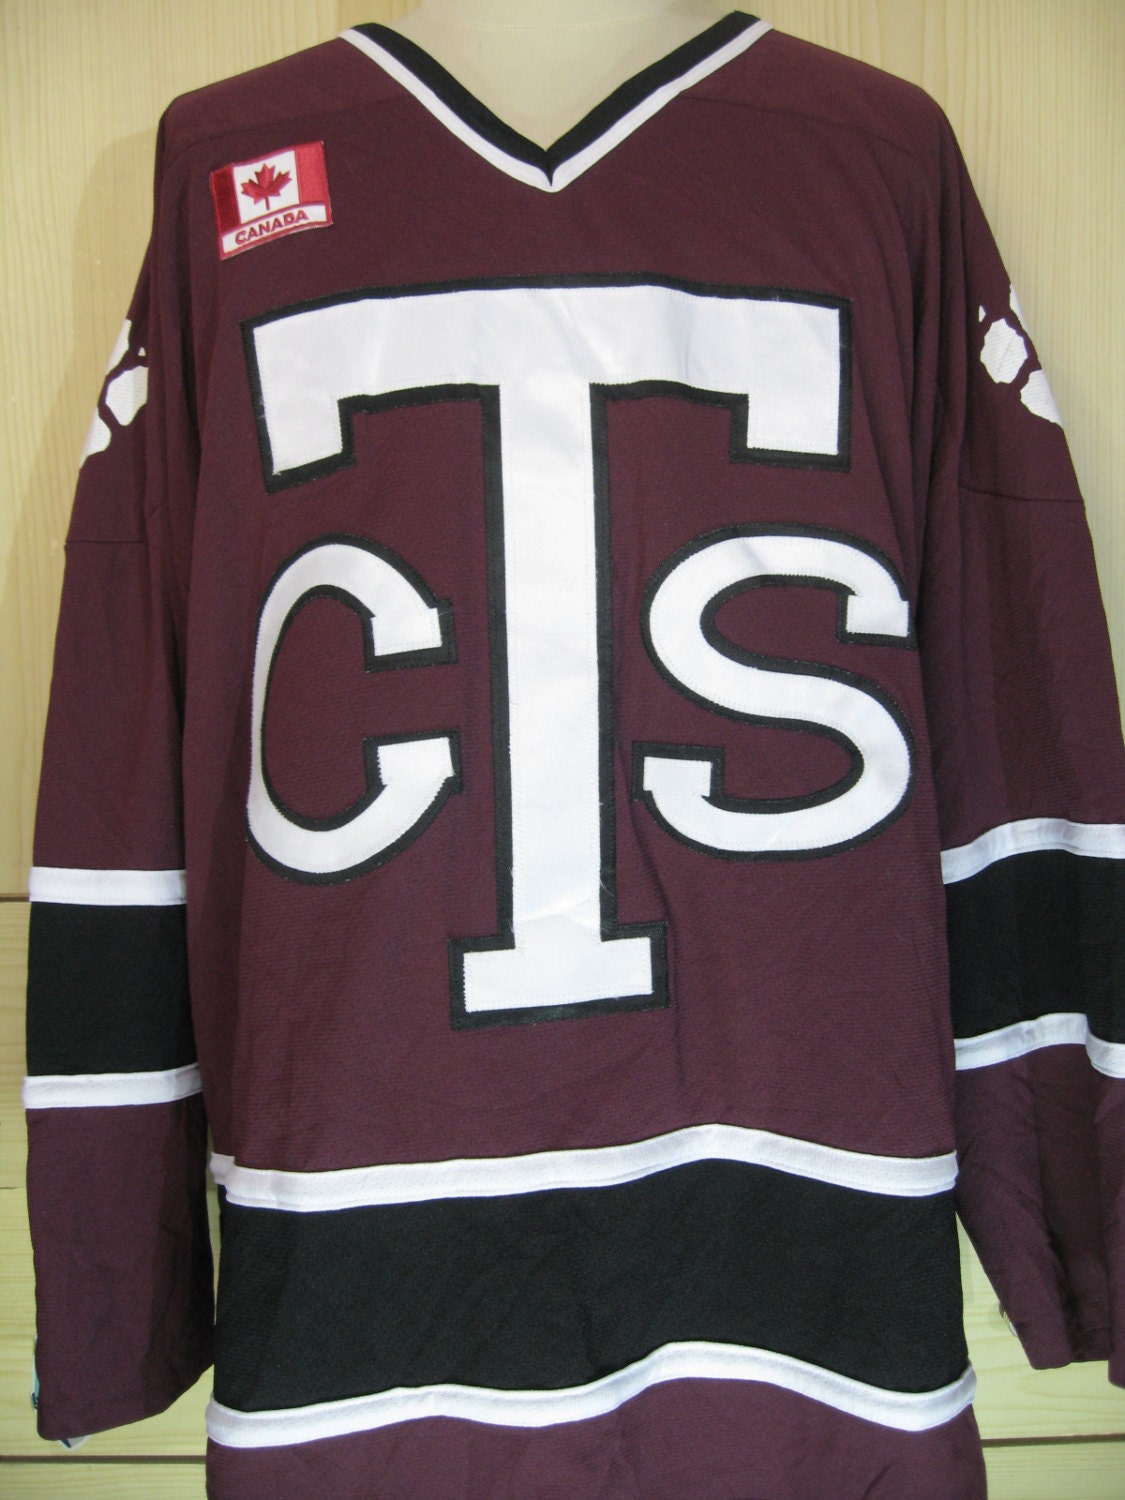 Vintage 1990s Columbus Blue Jackets NHL CCM Hockey Jersey / Sportswear /  NHL Fan Gear / Athleisure / Patchwork / Made In Canada / Streetwear